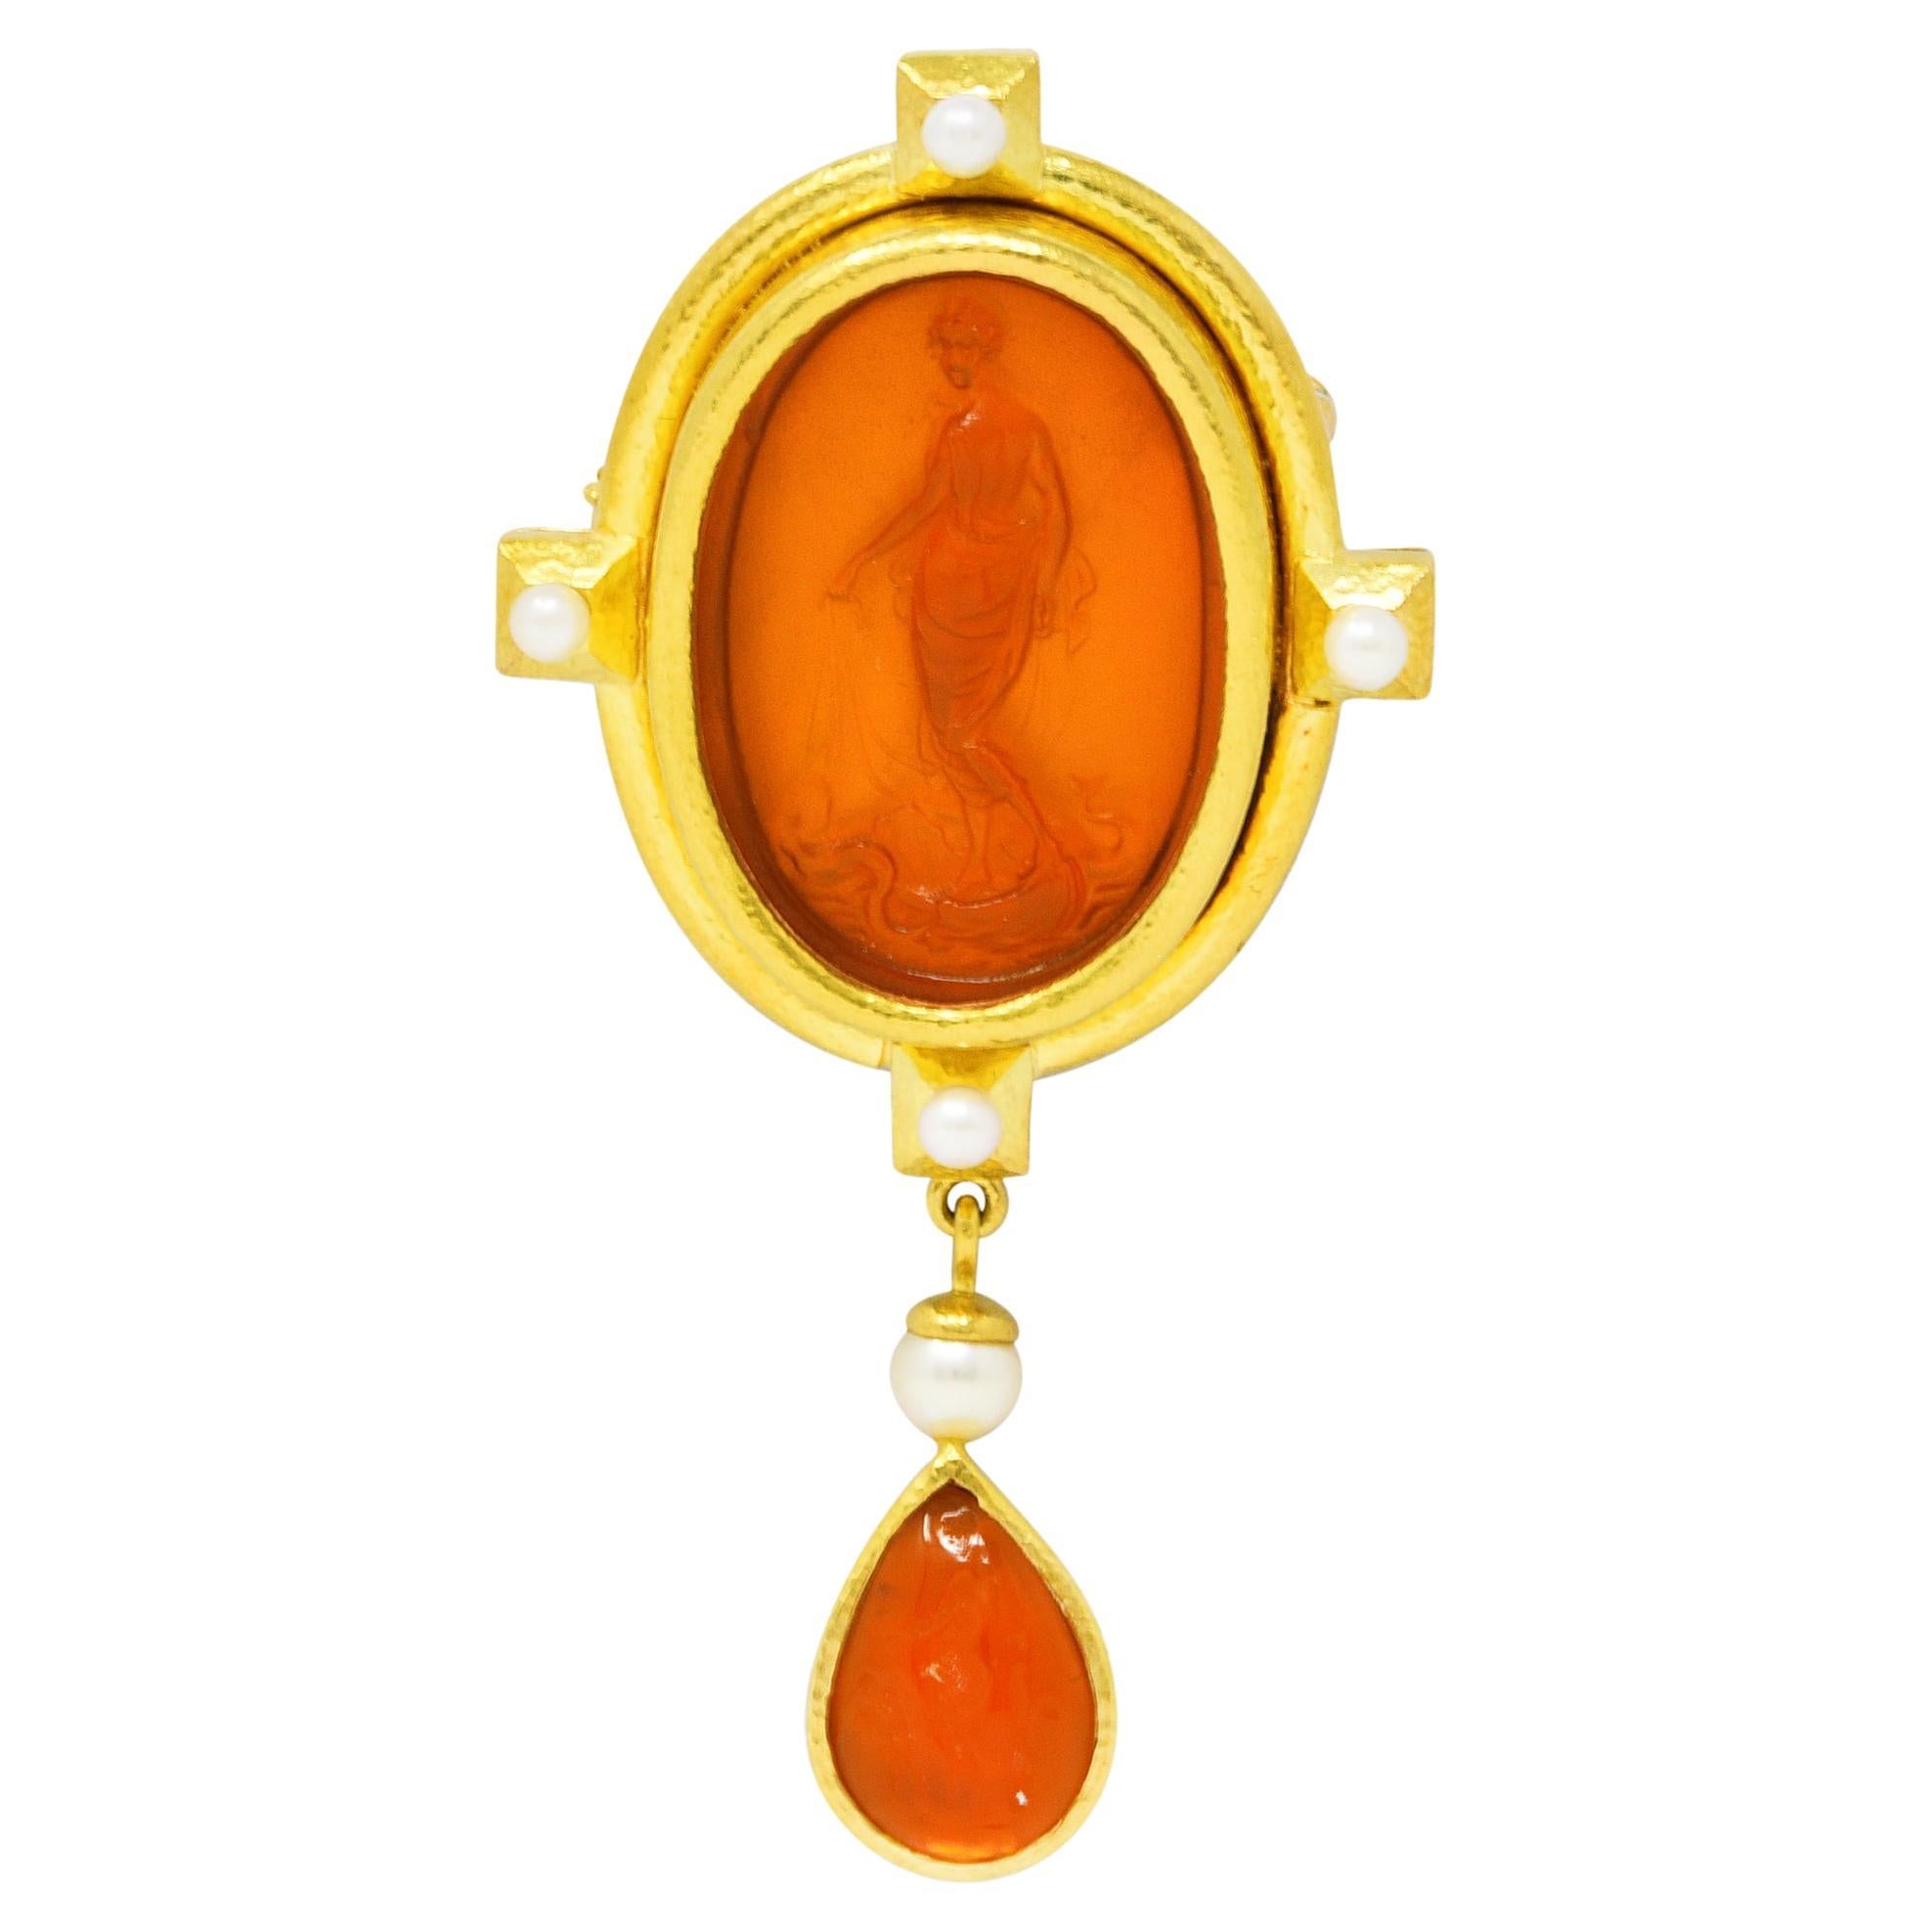 Elizabeth Locke Venetian Glass 18 Karat Gold Cameo Intaglio Goddess Pendant Pin